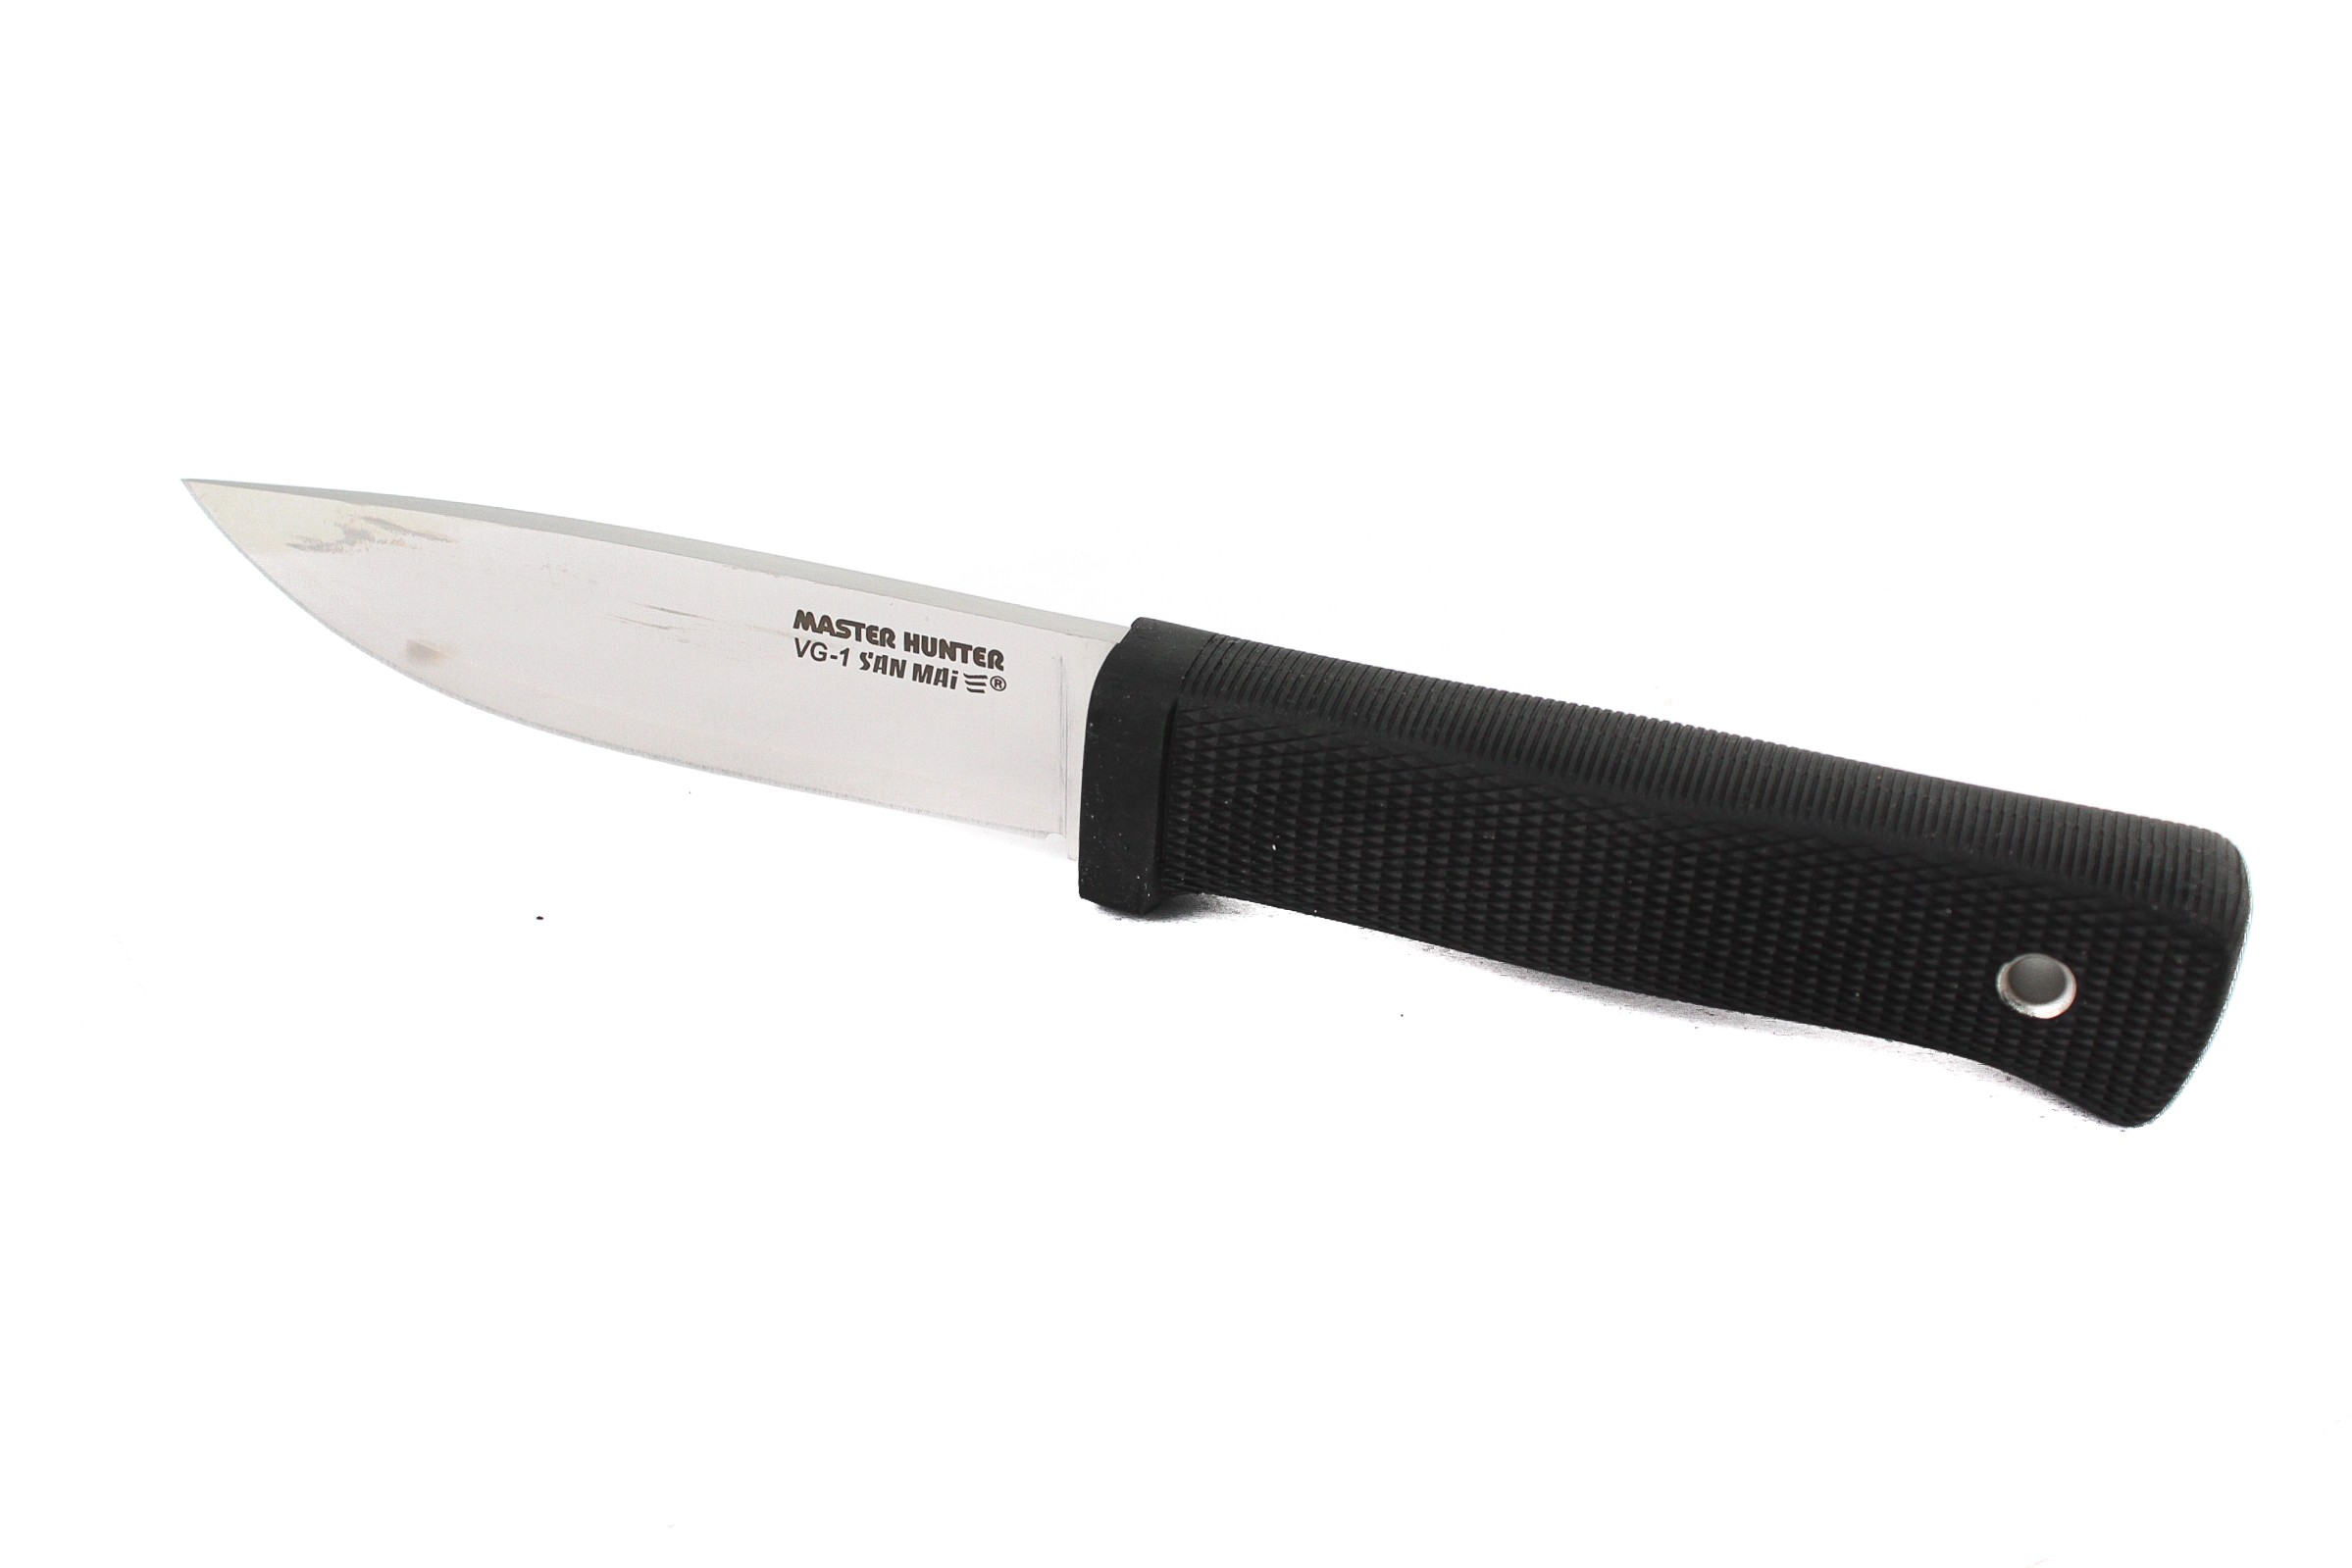 Нож Cold Steel Master Hunter фиксированный клинок 11,5см VG-1 San mai lll - фото 1